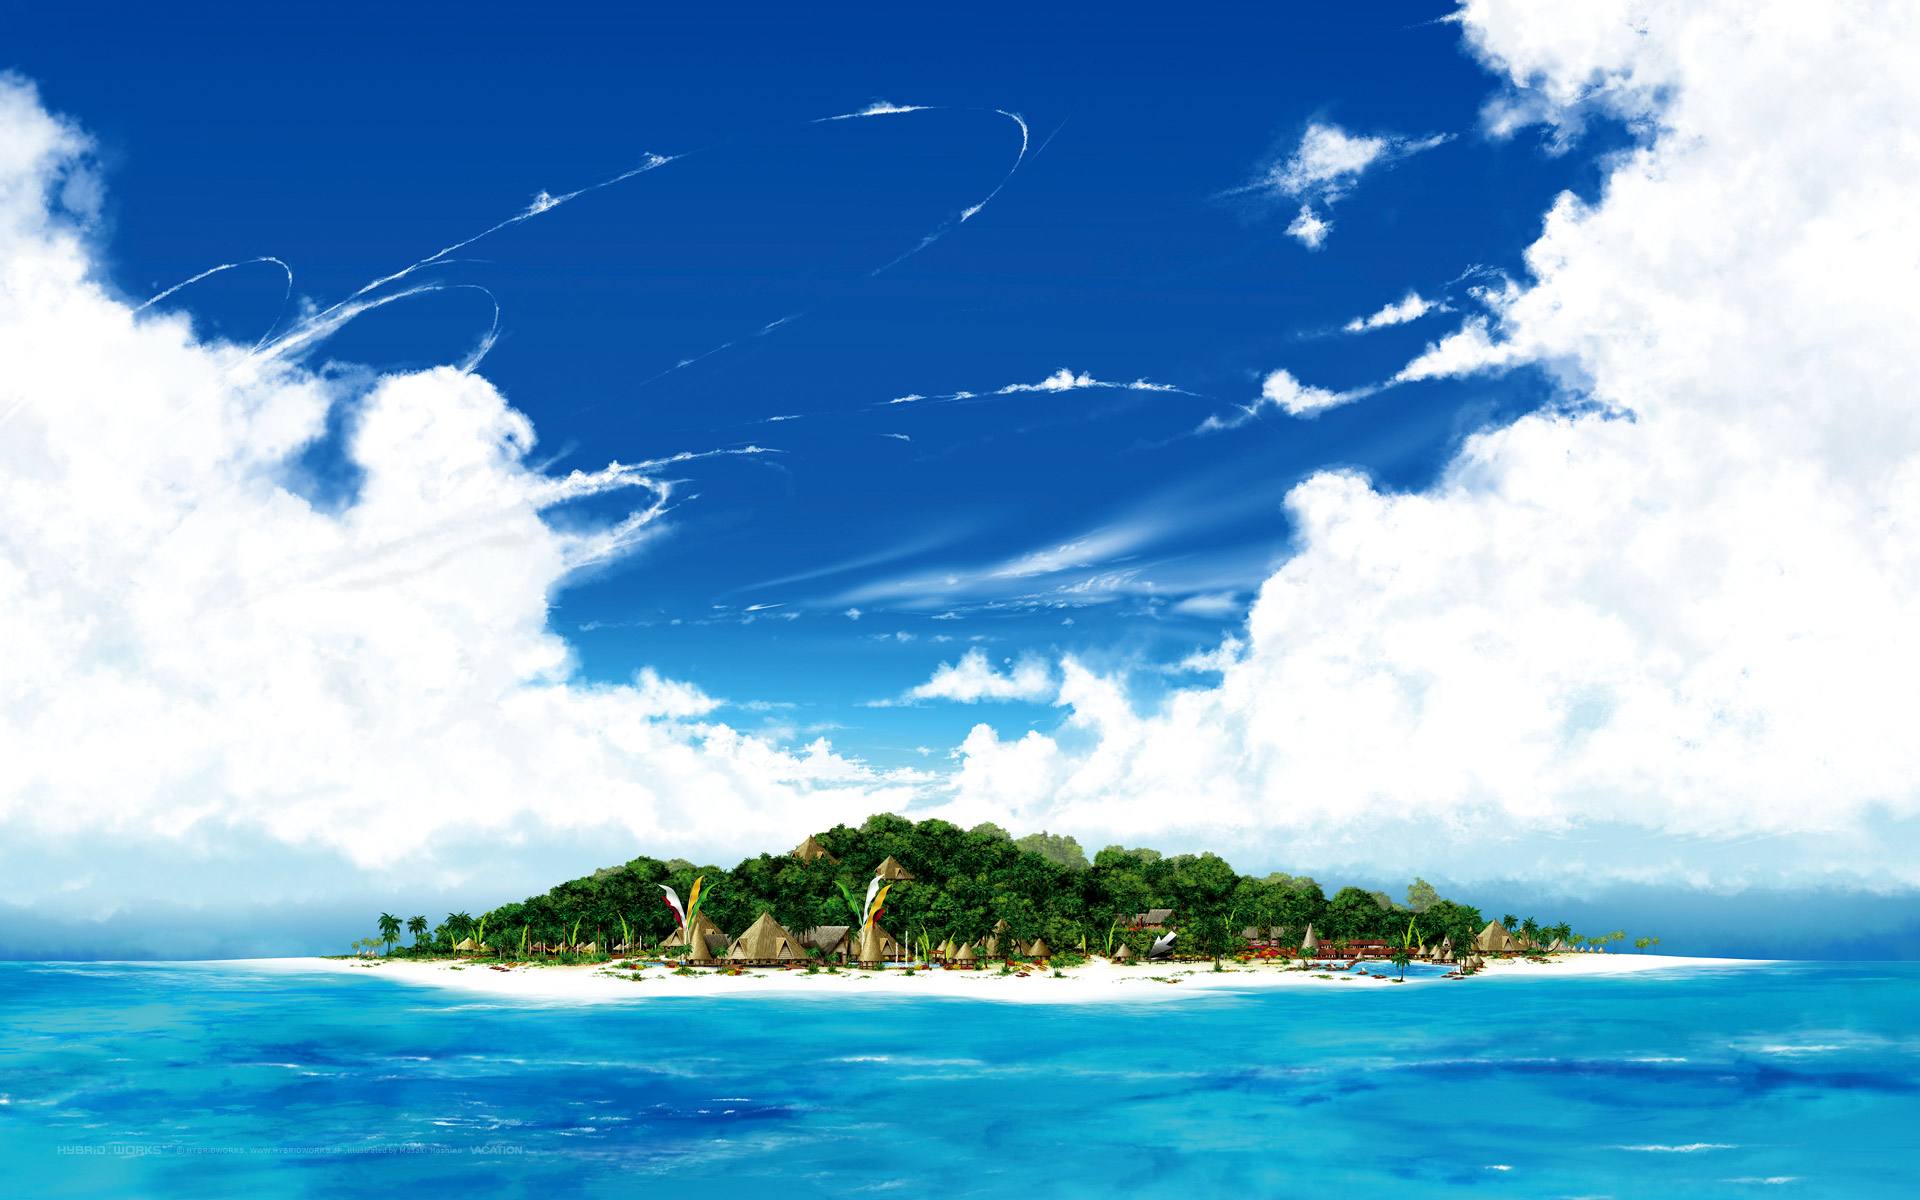 Artistic Beach HD Wallpaper | Background Image